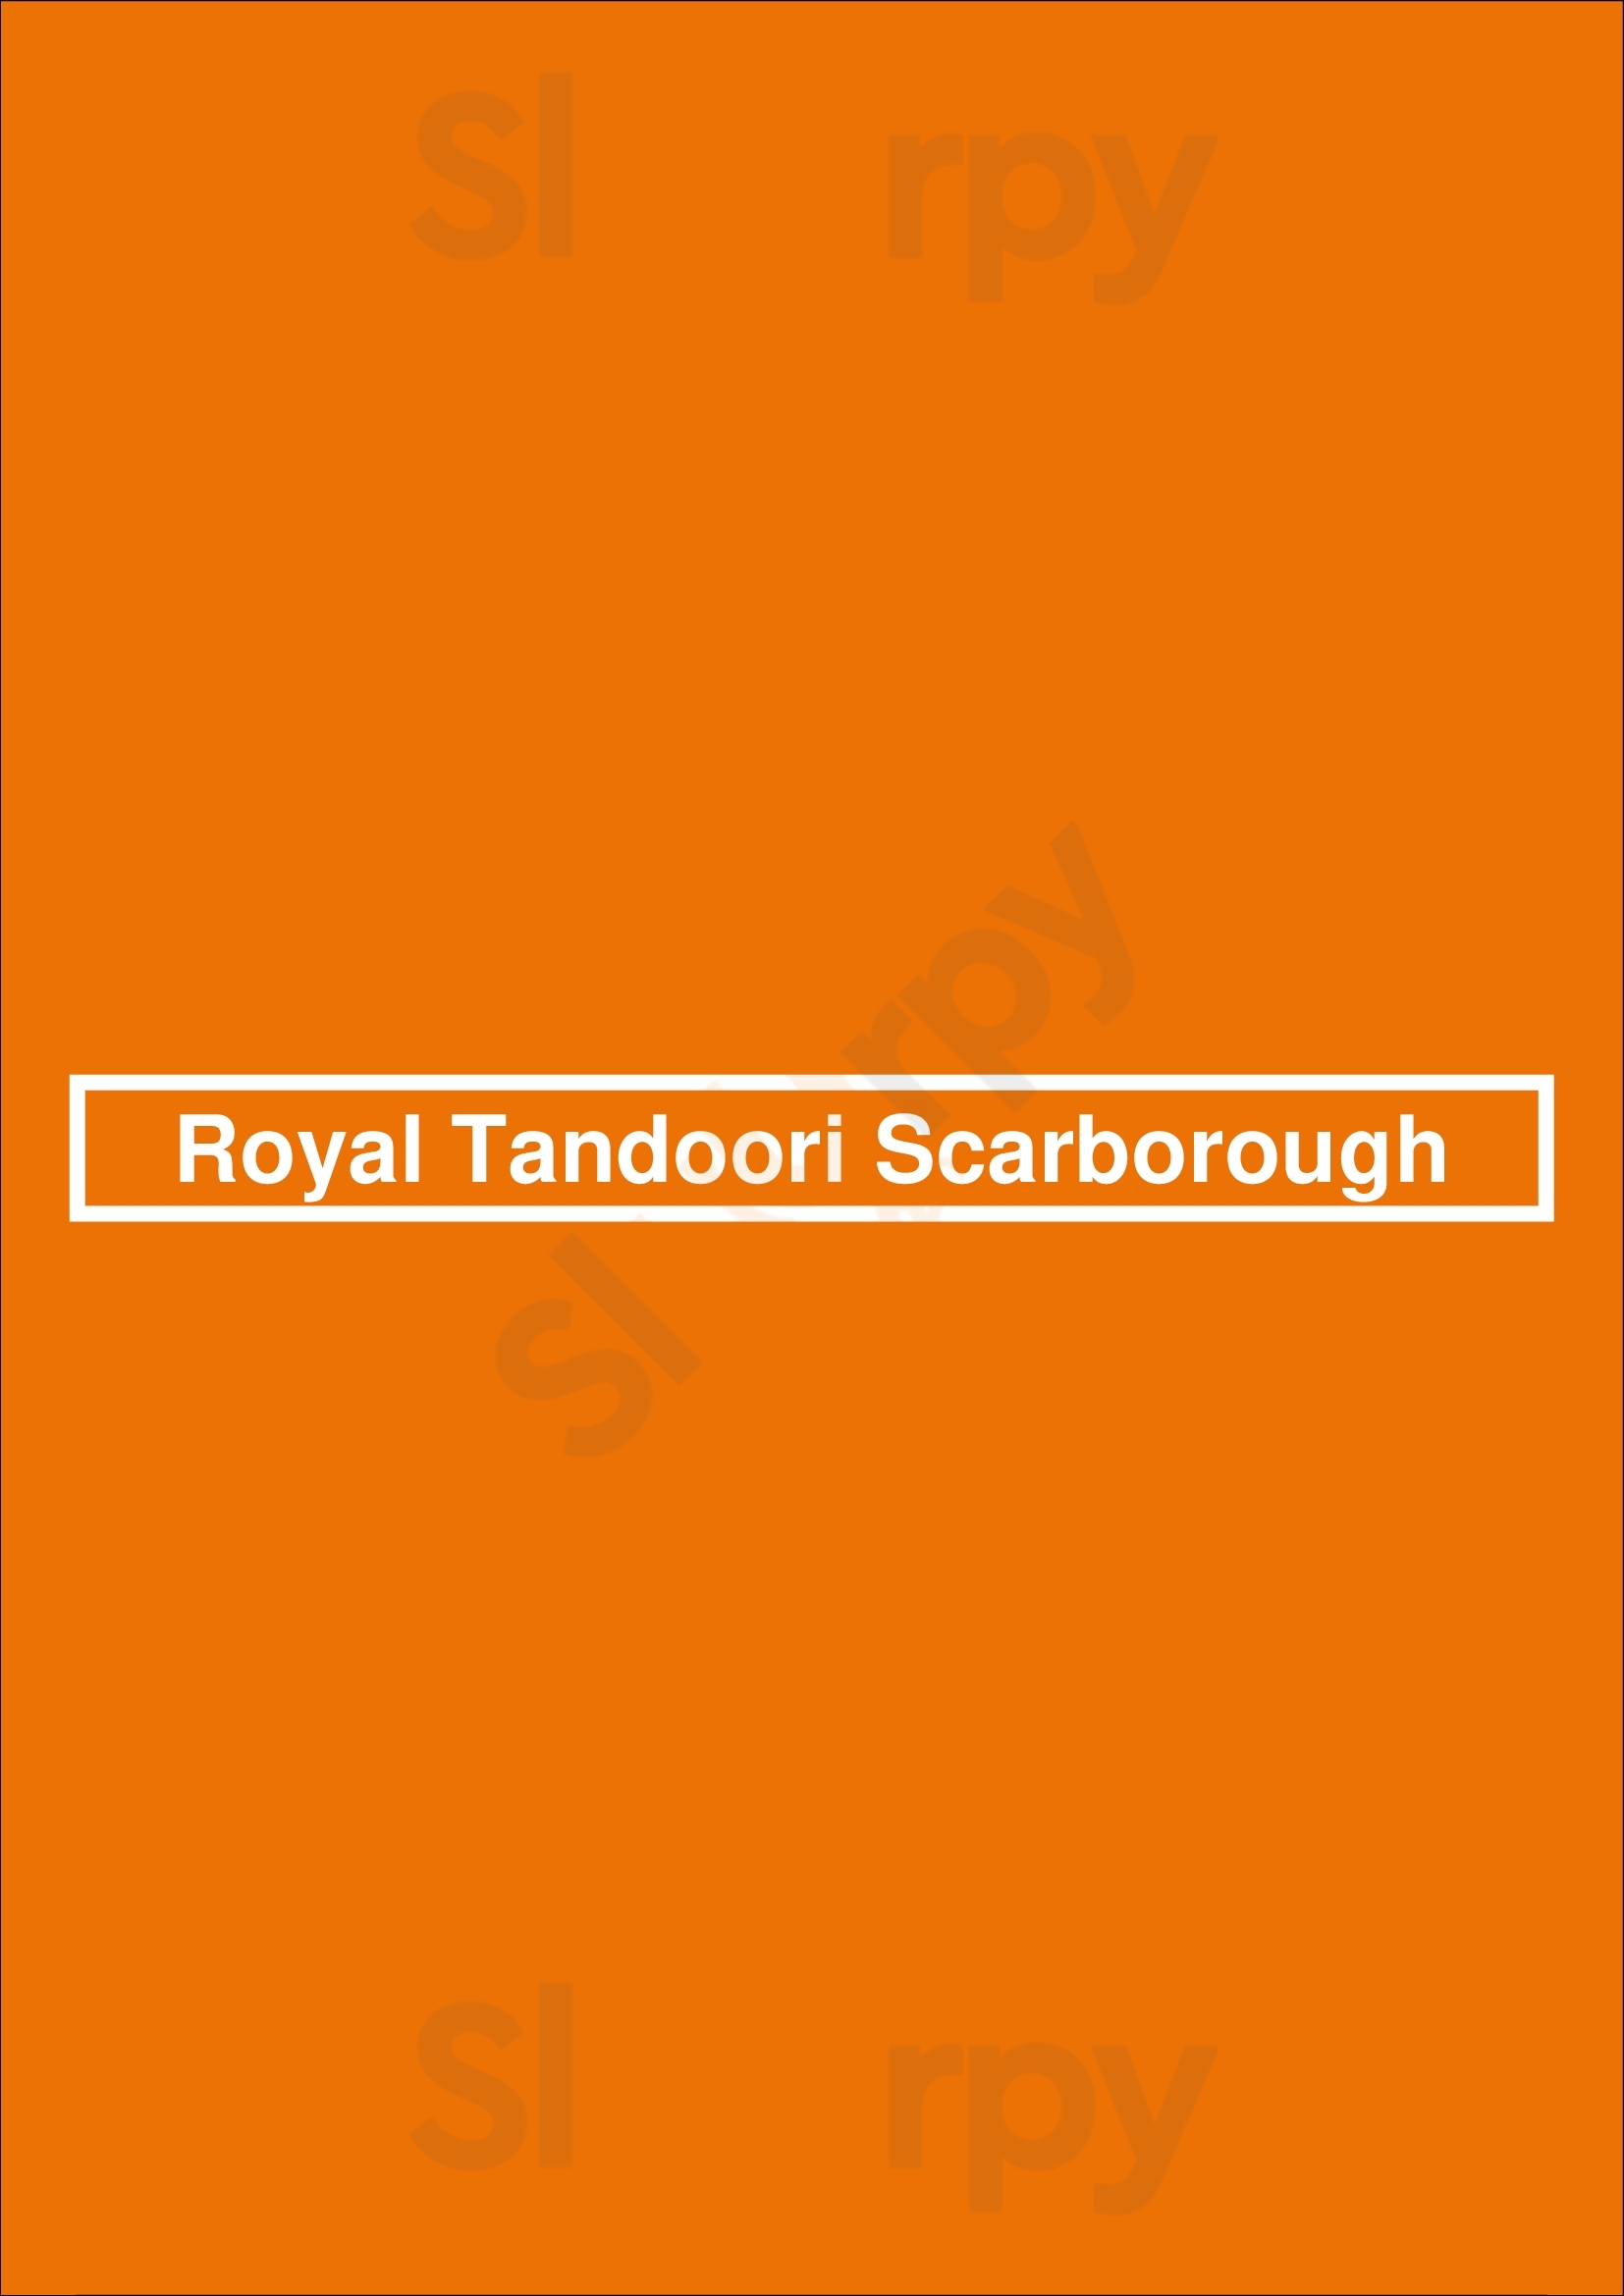 Royal Tandoori Scarborough Scarborough Menu - 1